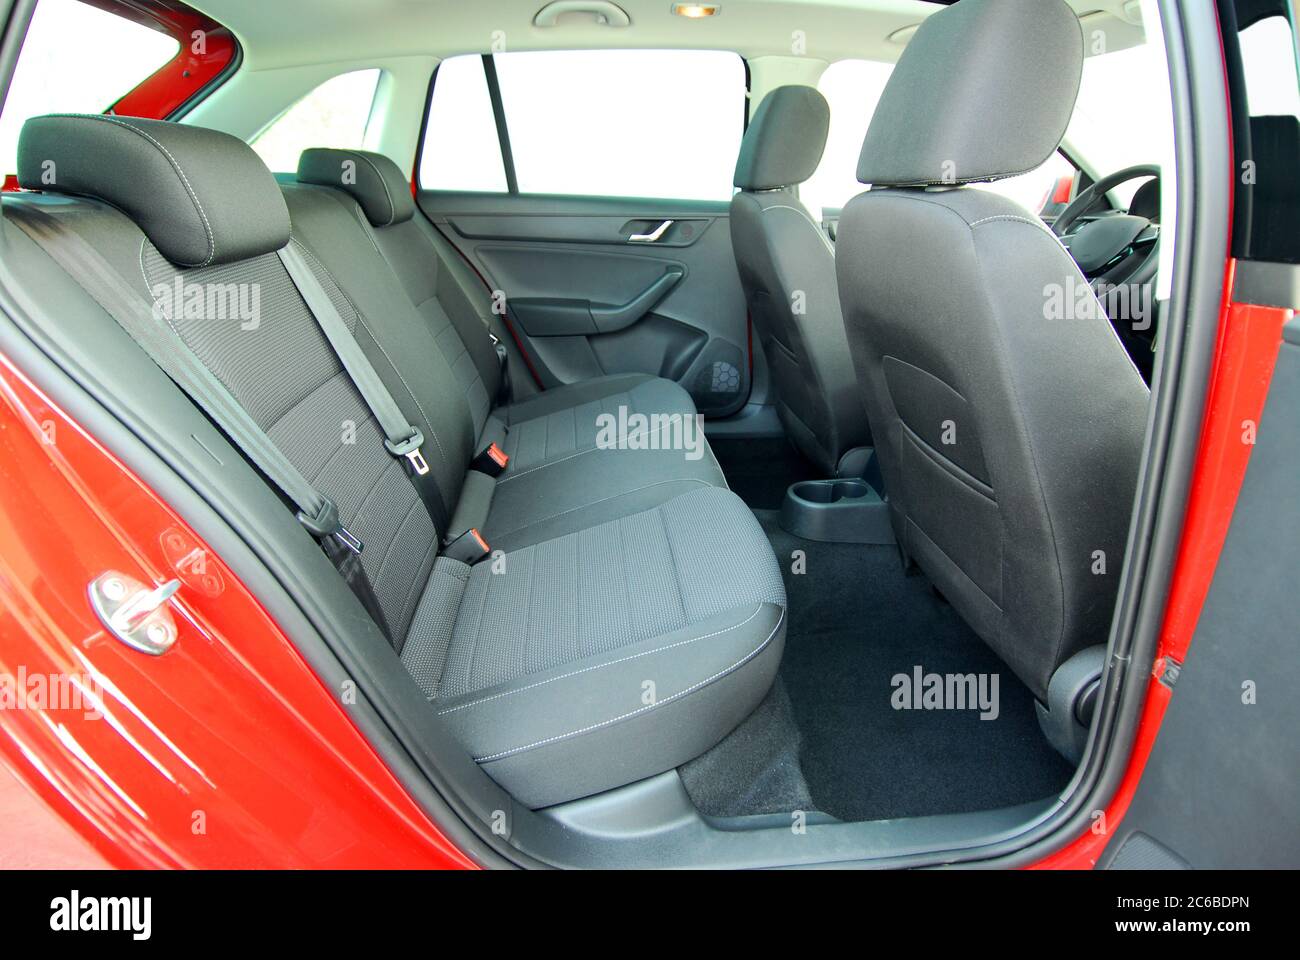 rear car seat, car interior, black rear seat in the passinger car Stock Photo